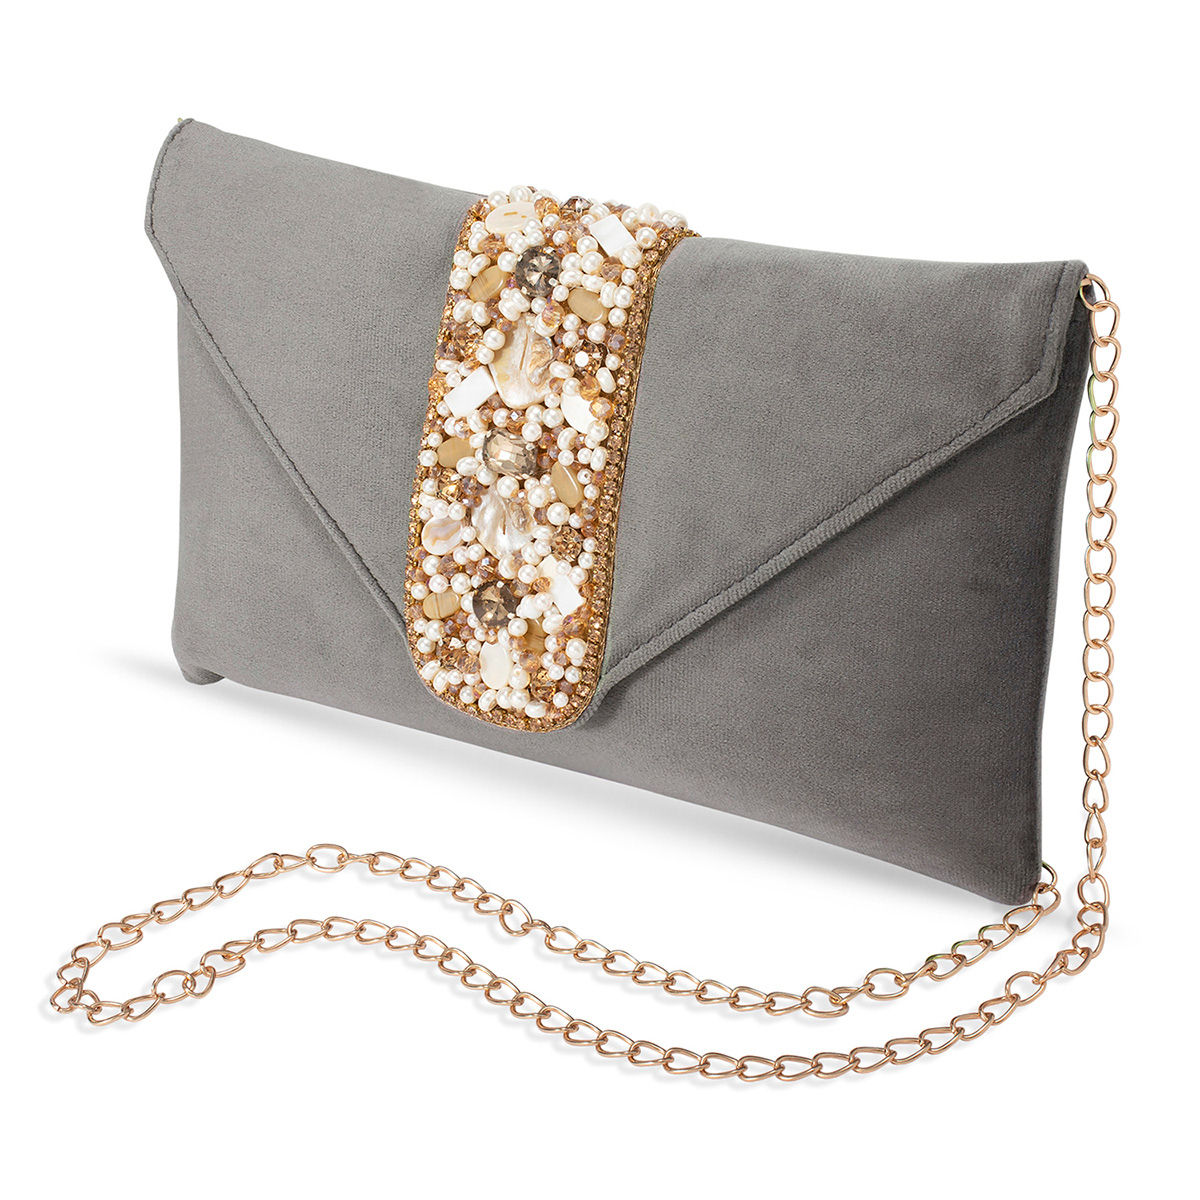 Shop pure silver clutch purse online at Chokha Haar - 179947